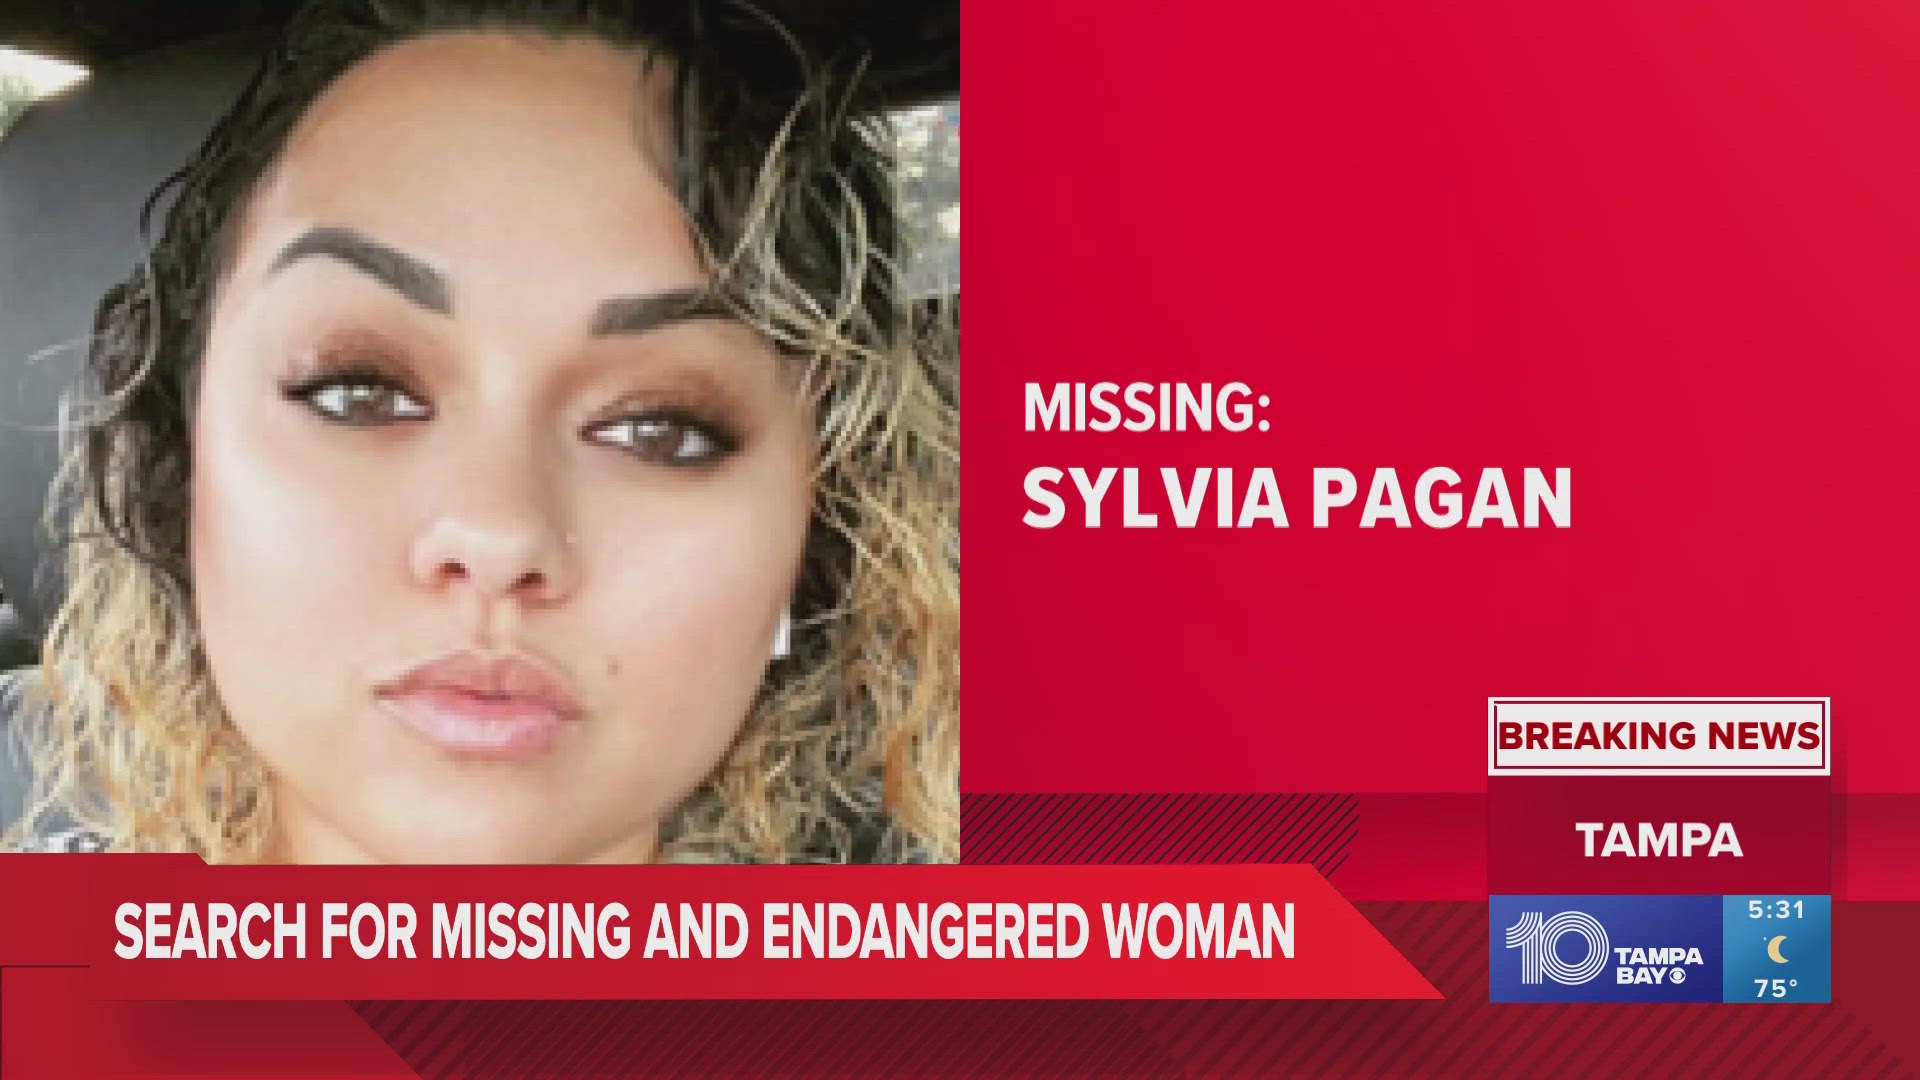 Sylvia Pagan was last seen around 10 a.m. on May 12 on Altman Street near East Bougainvillea Avenue.